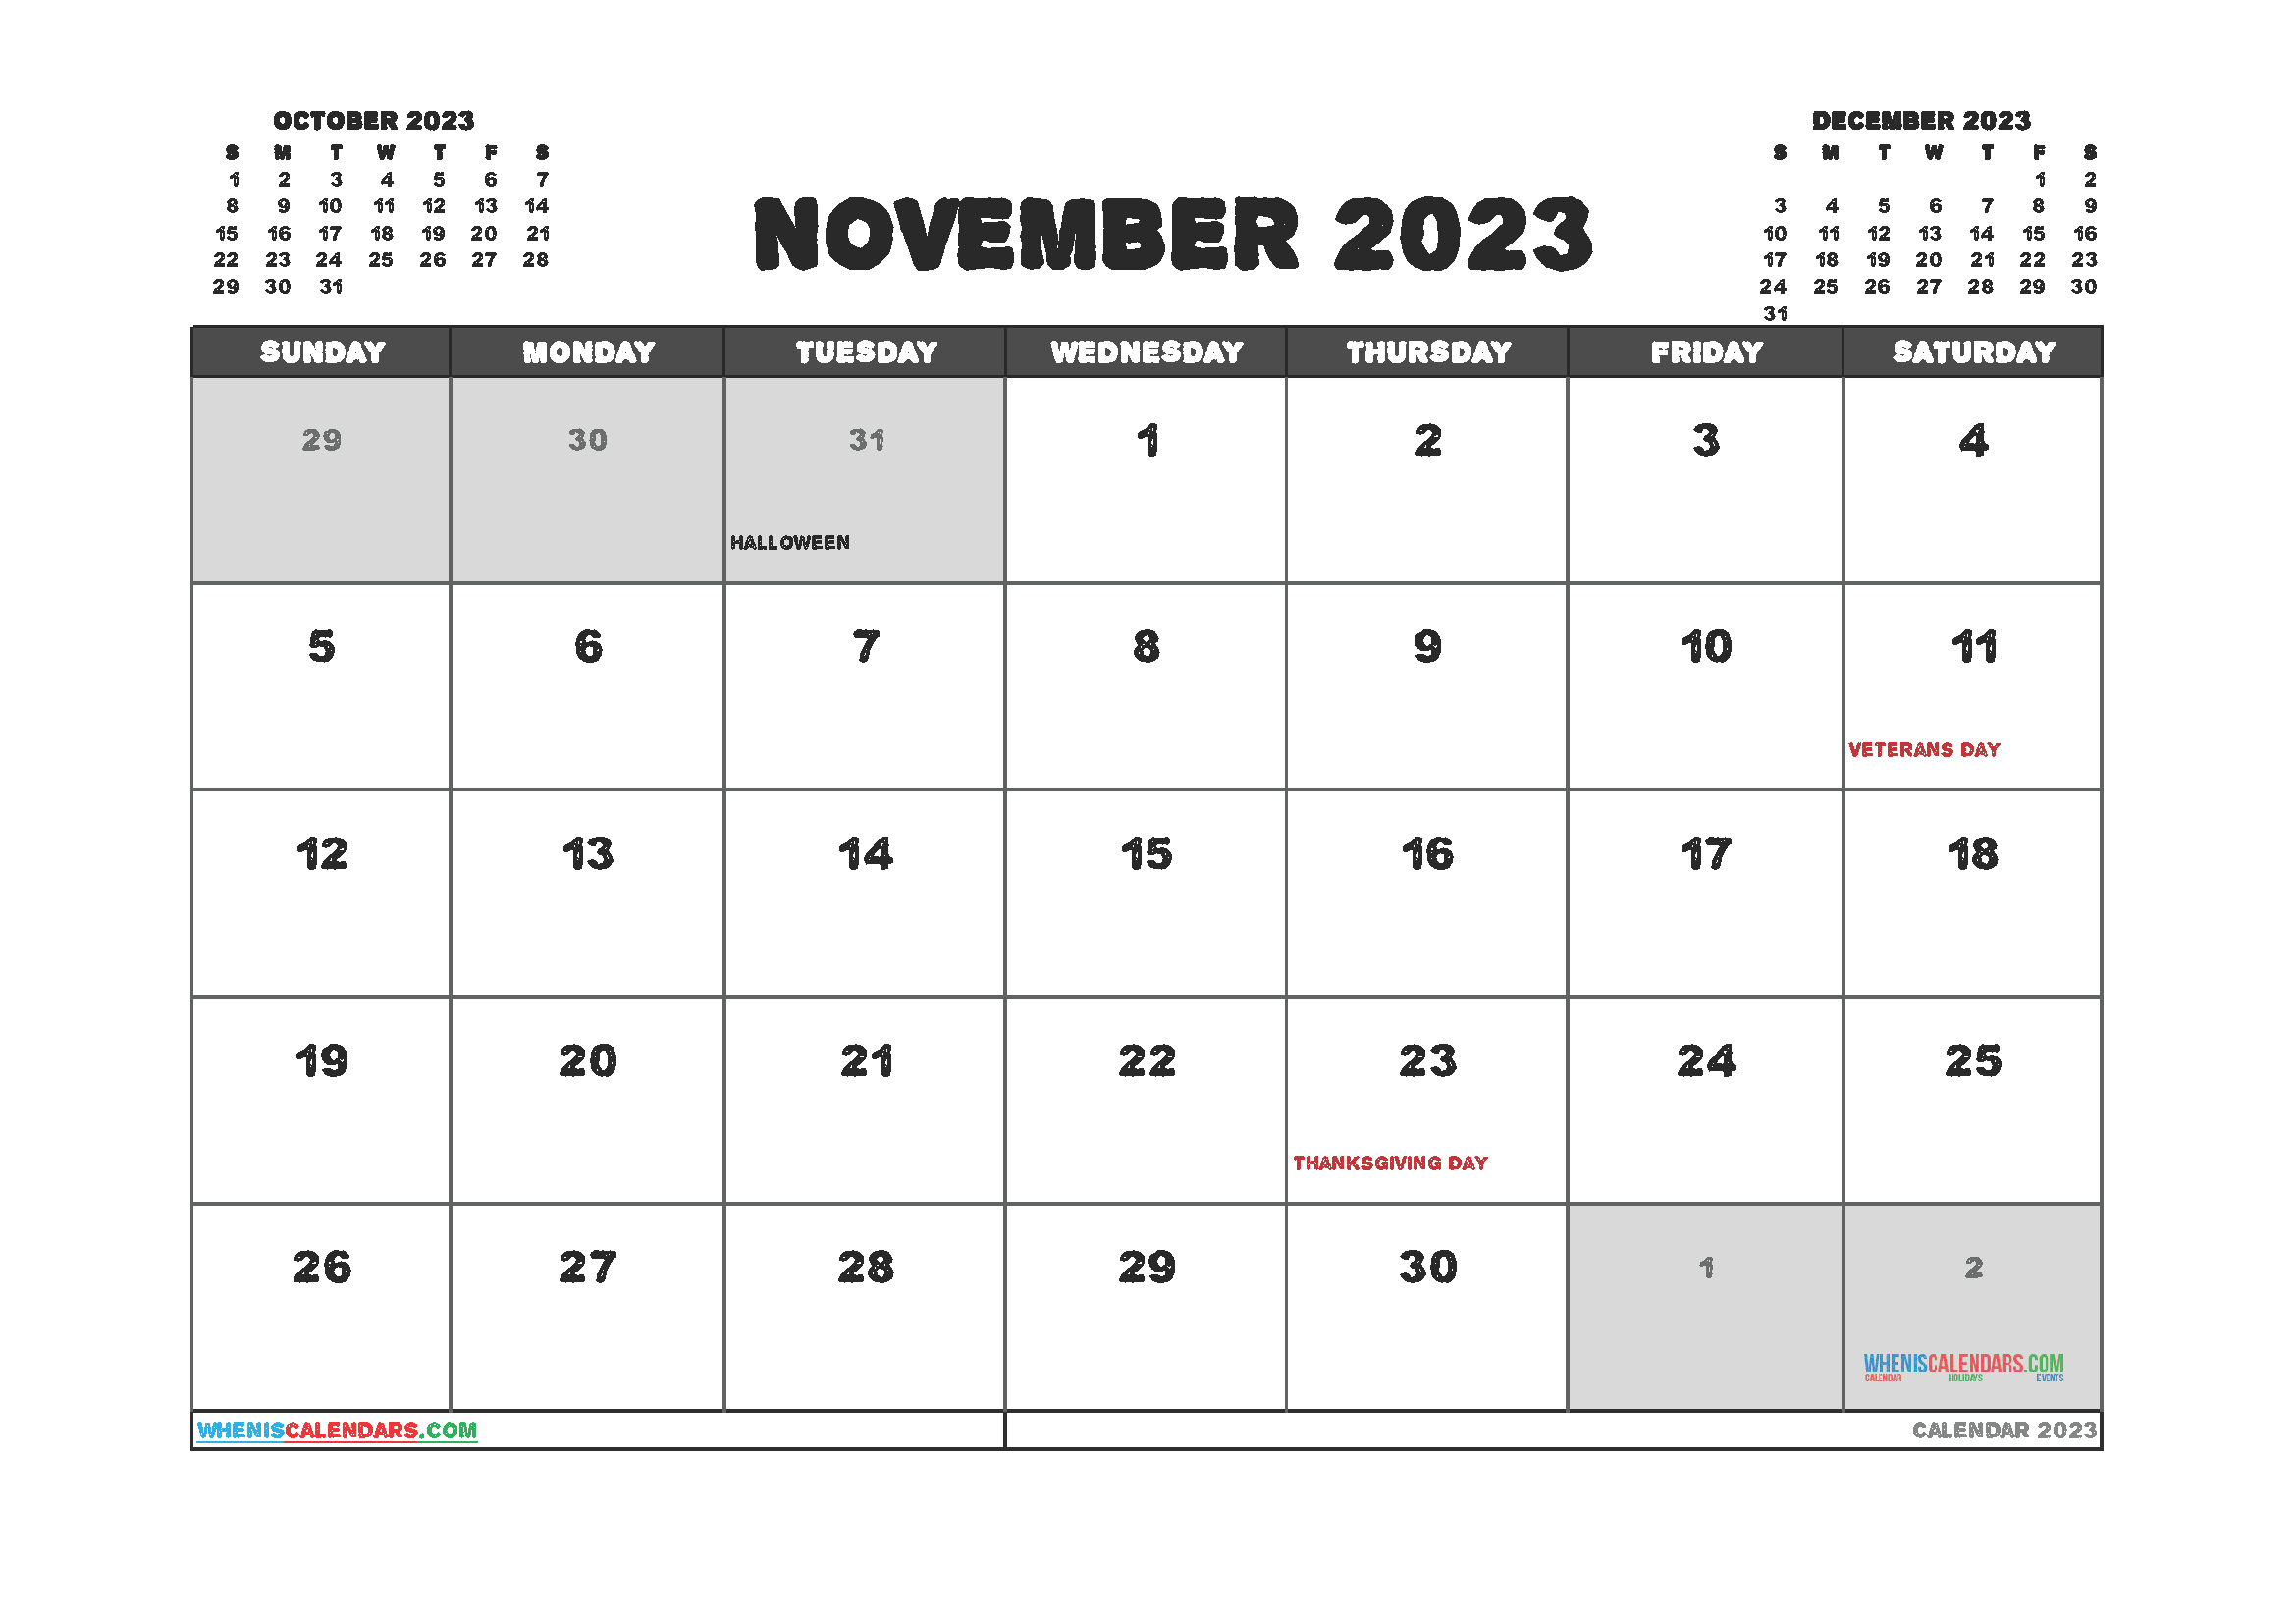 Free Printable November 2023 Calendar Recette 2023